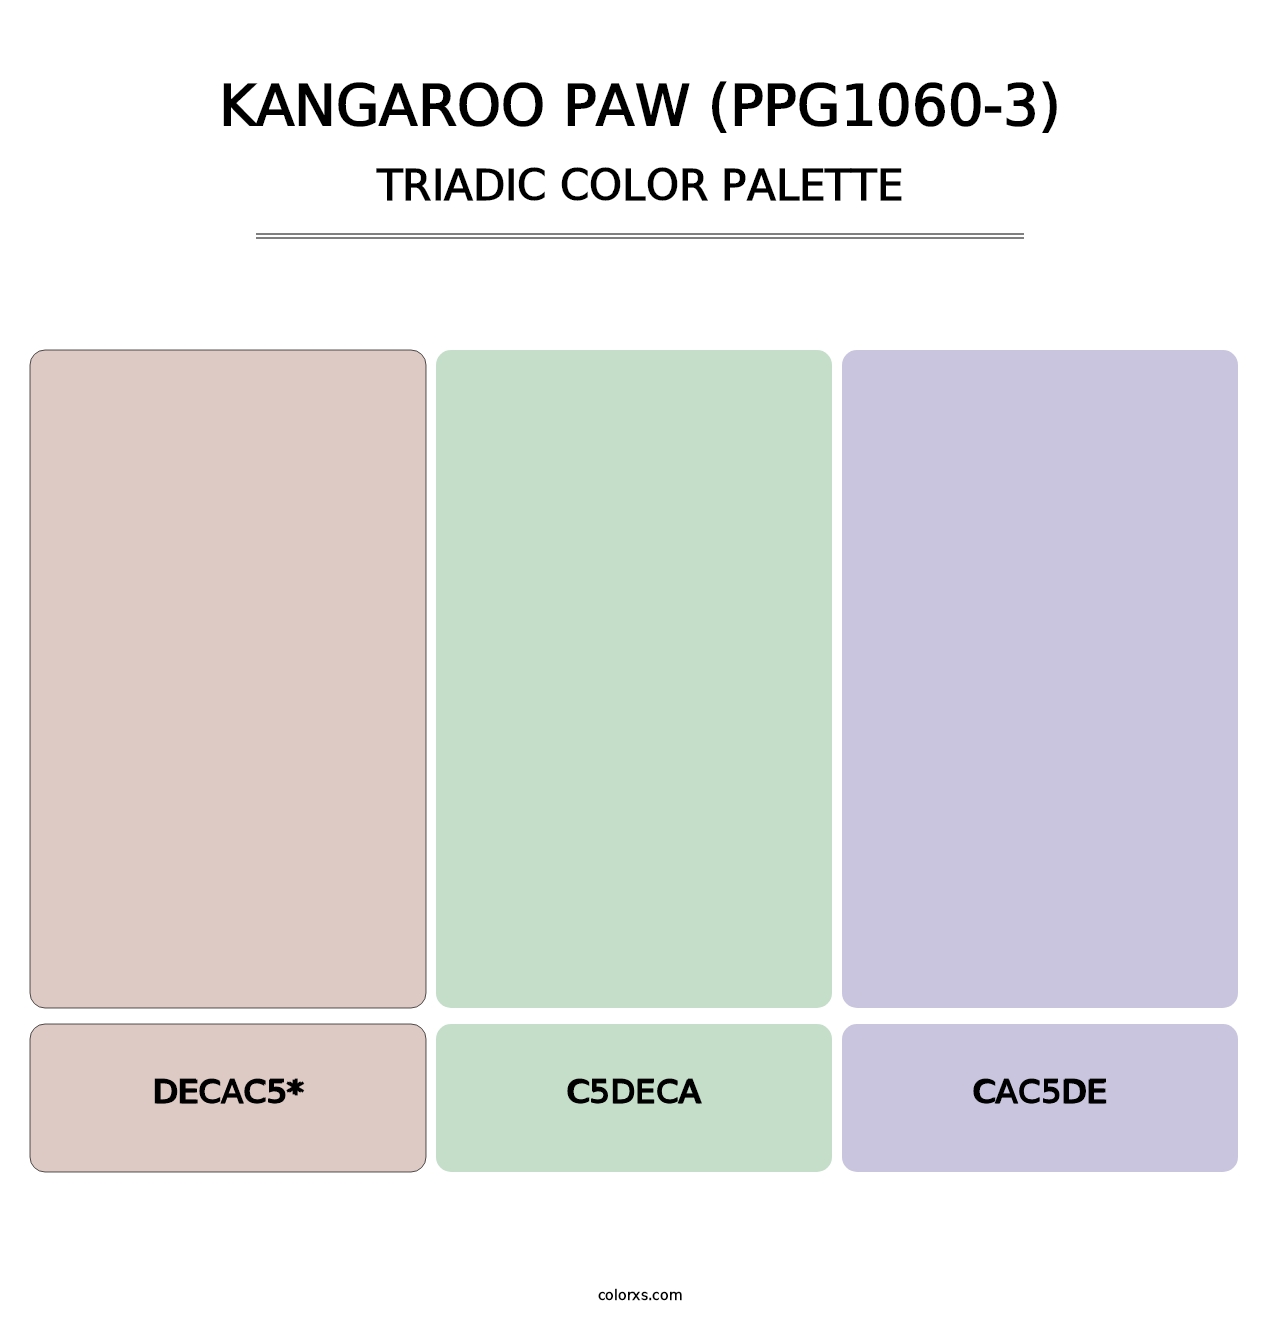 Kangaroo Paw (PPG1060-3) - Triadic Color Palette